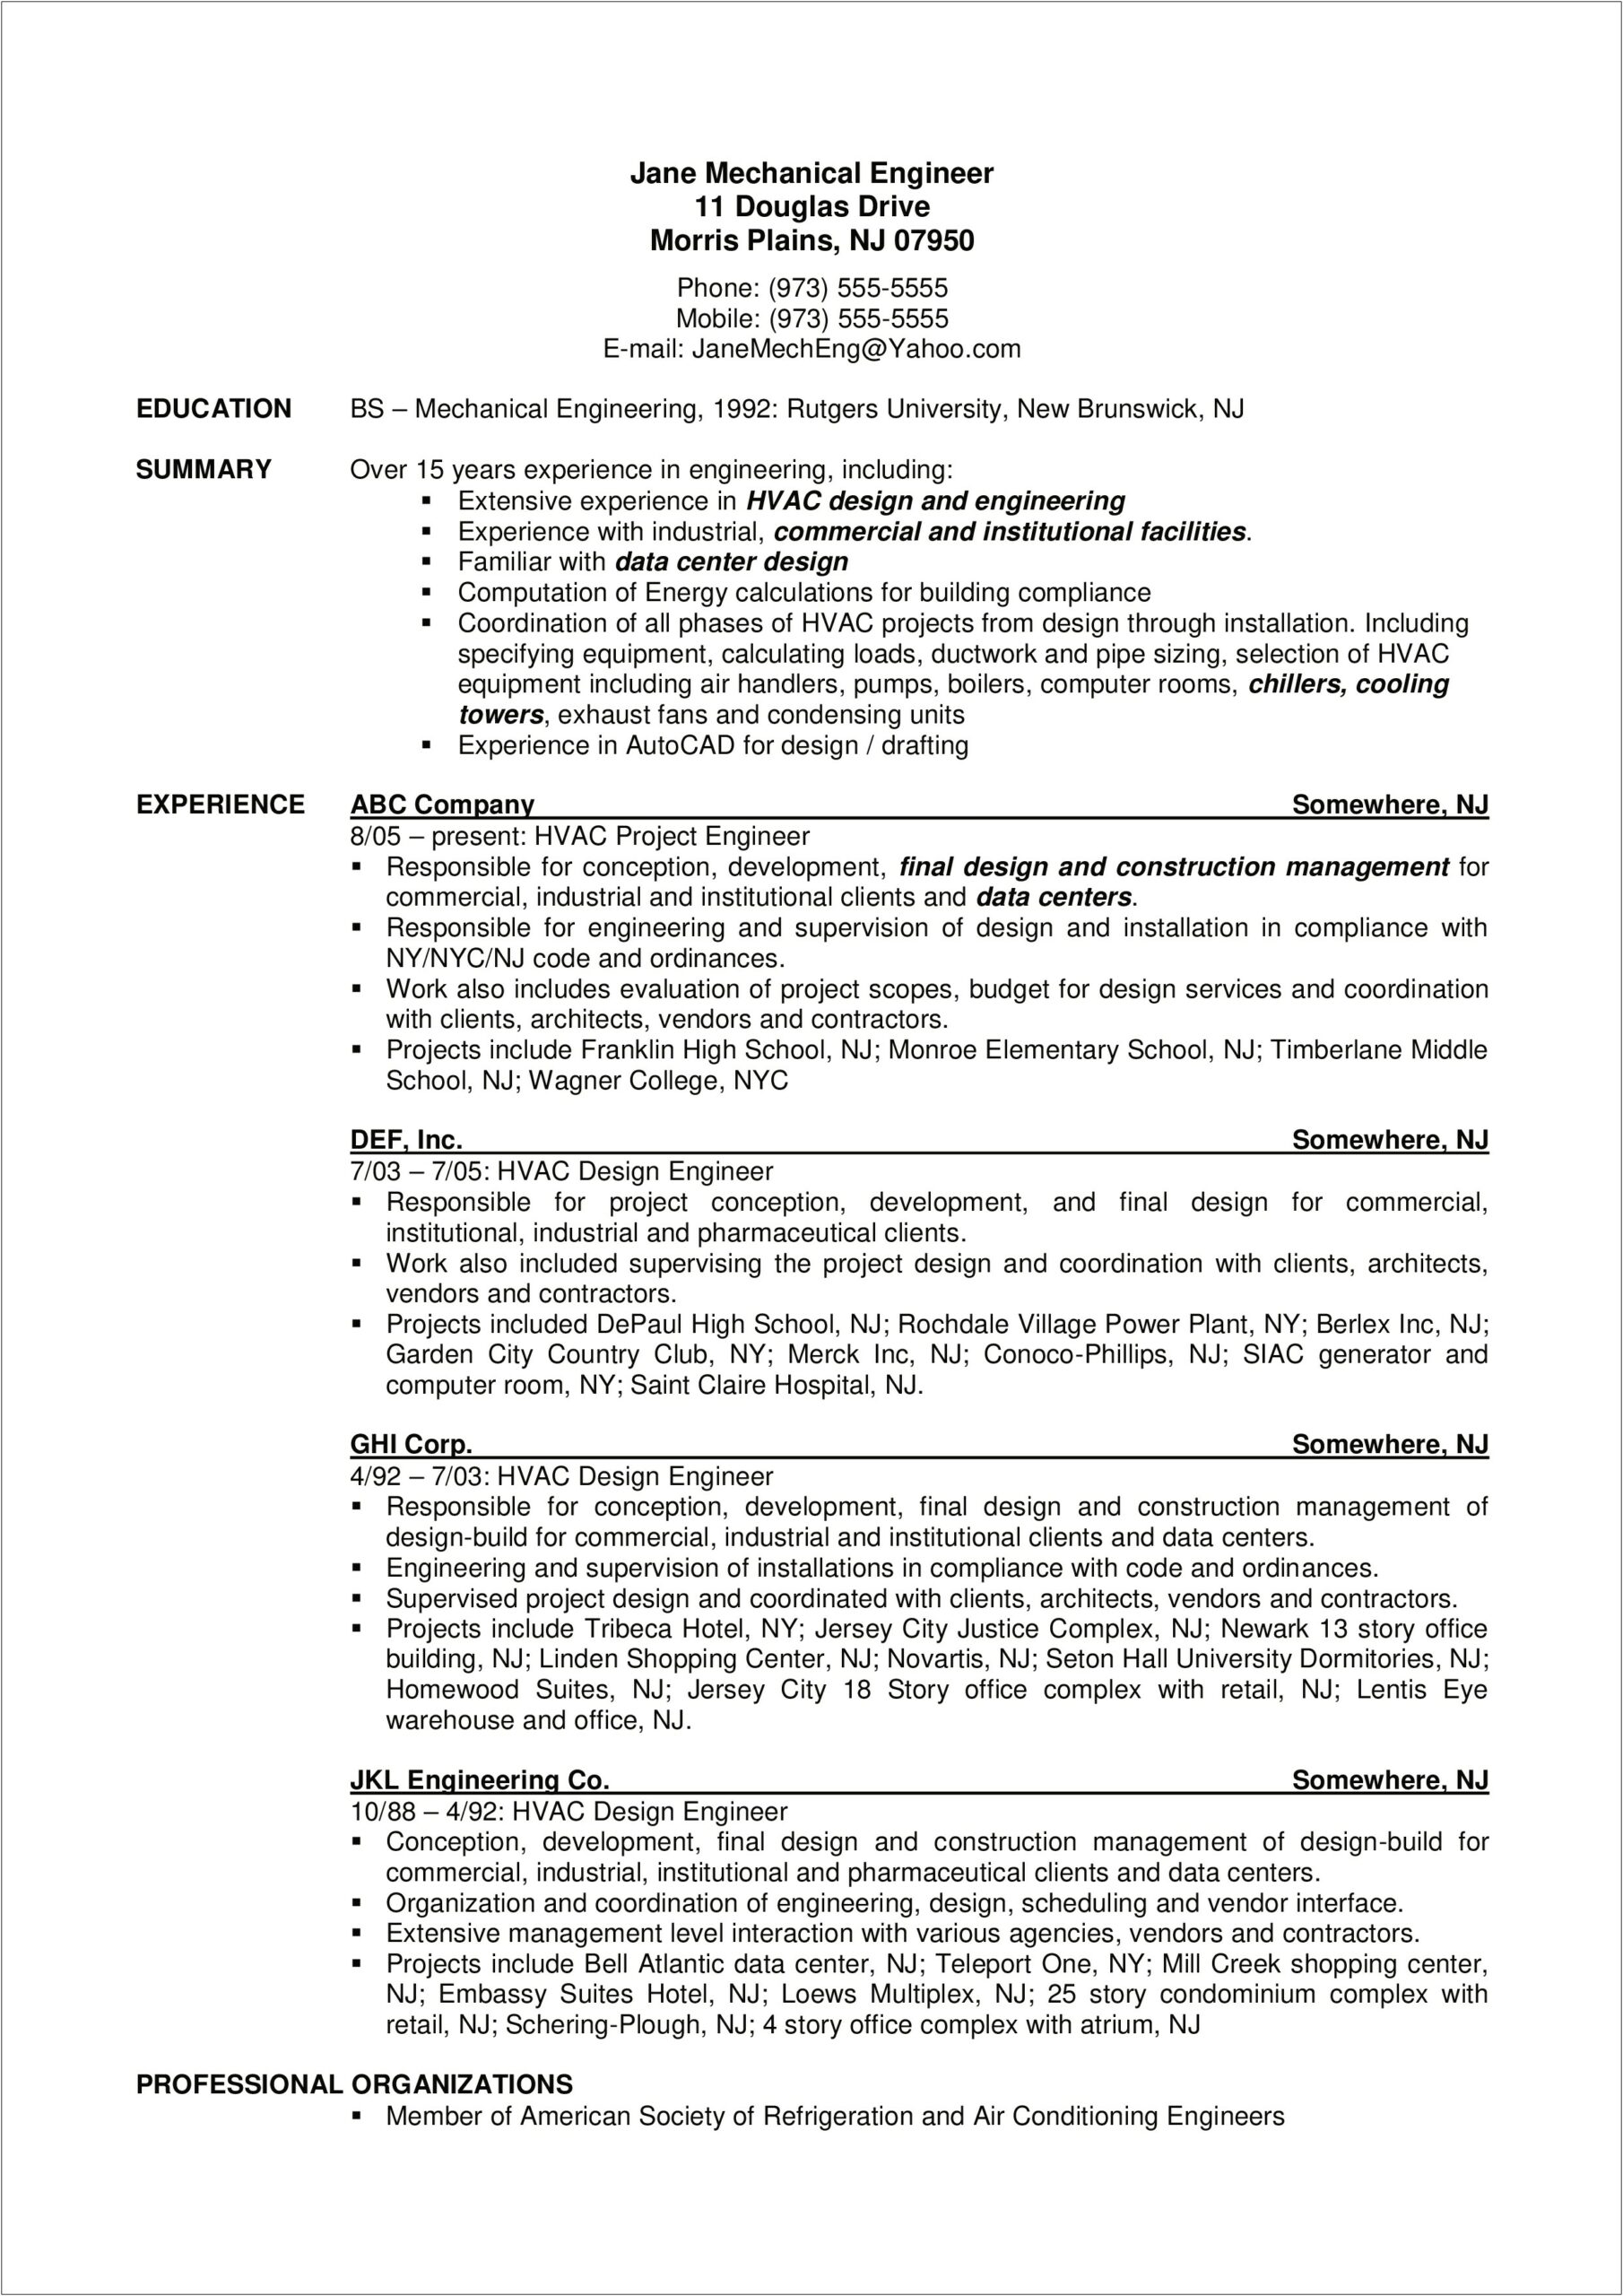 Mechanical Engineer Summary Of Qualifications Resume